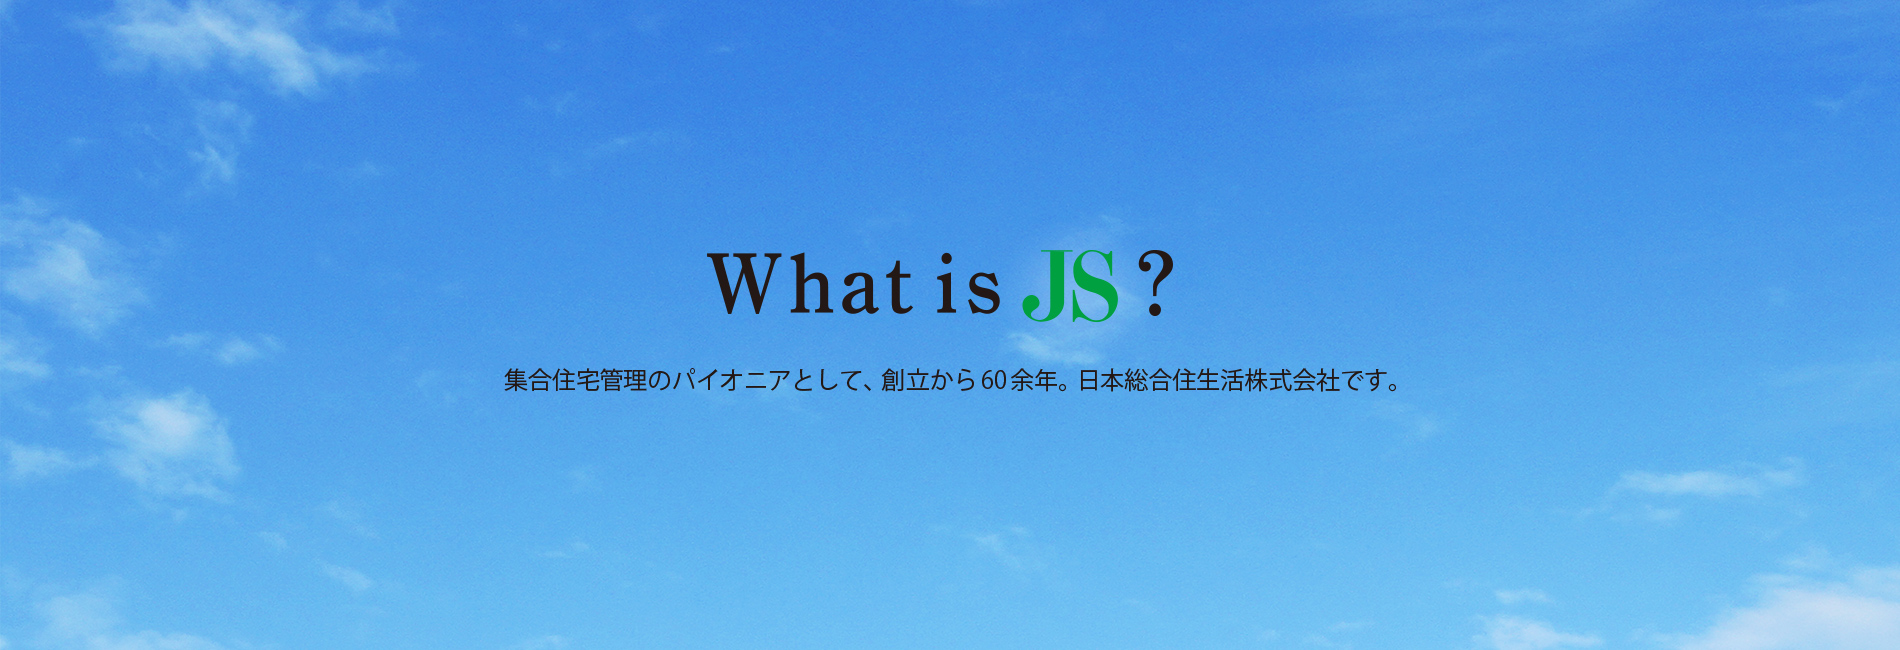 What is 'JS' ? - 集合住宅管理のパイオニアとして、創立から60余年。日本総合住生活株式会社です。